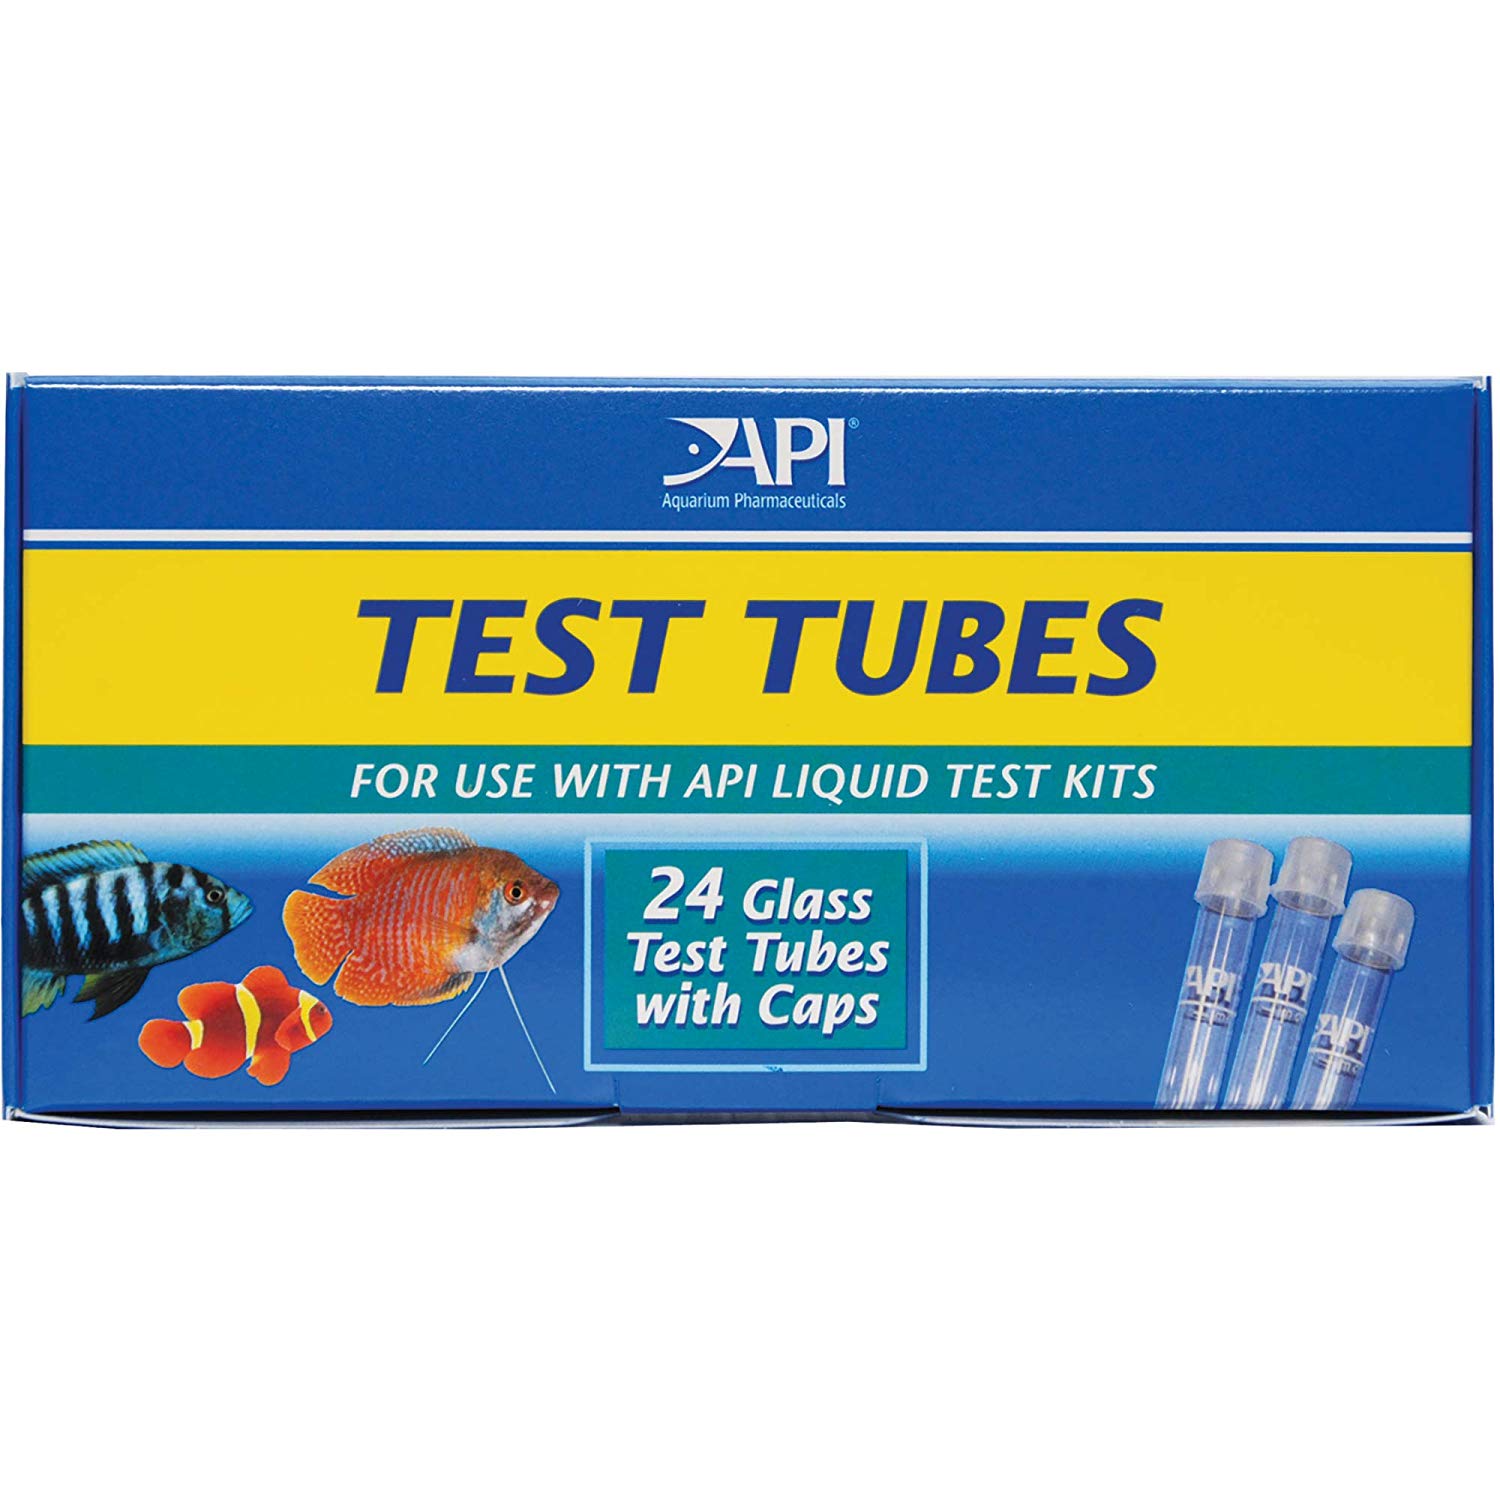 TEST TUBES